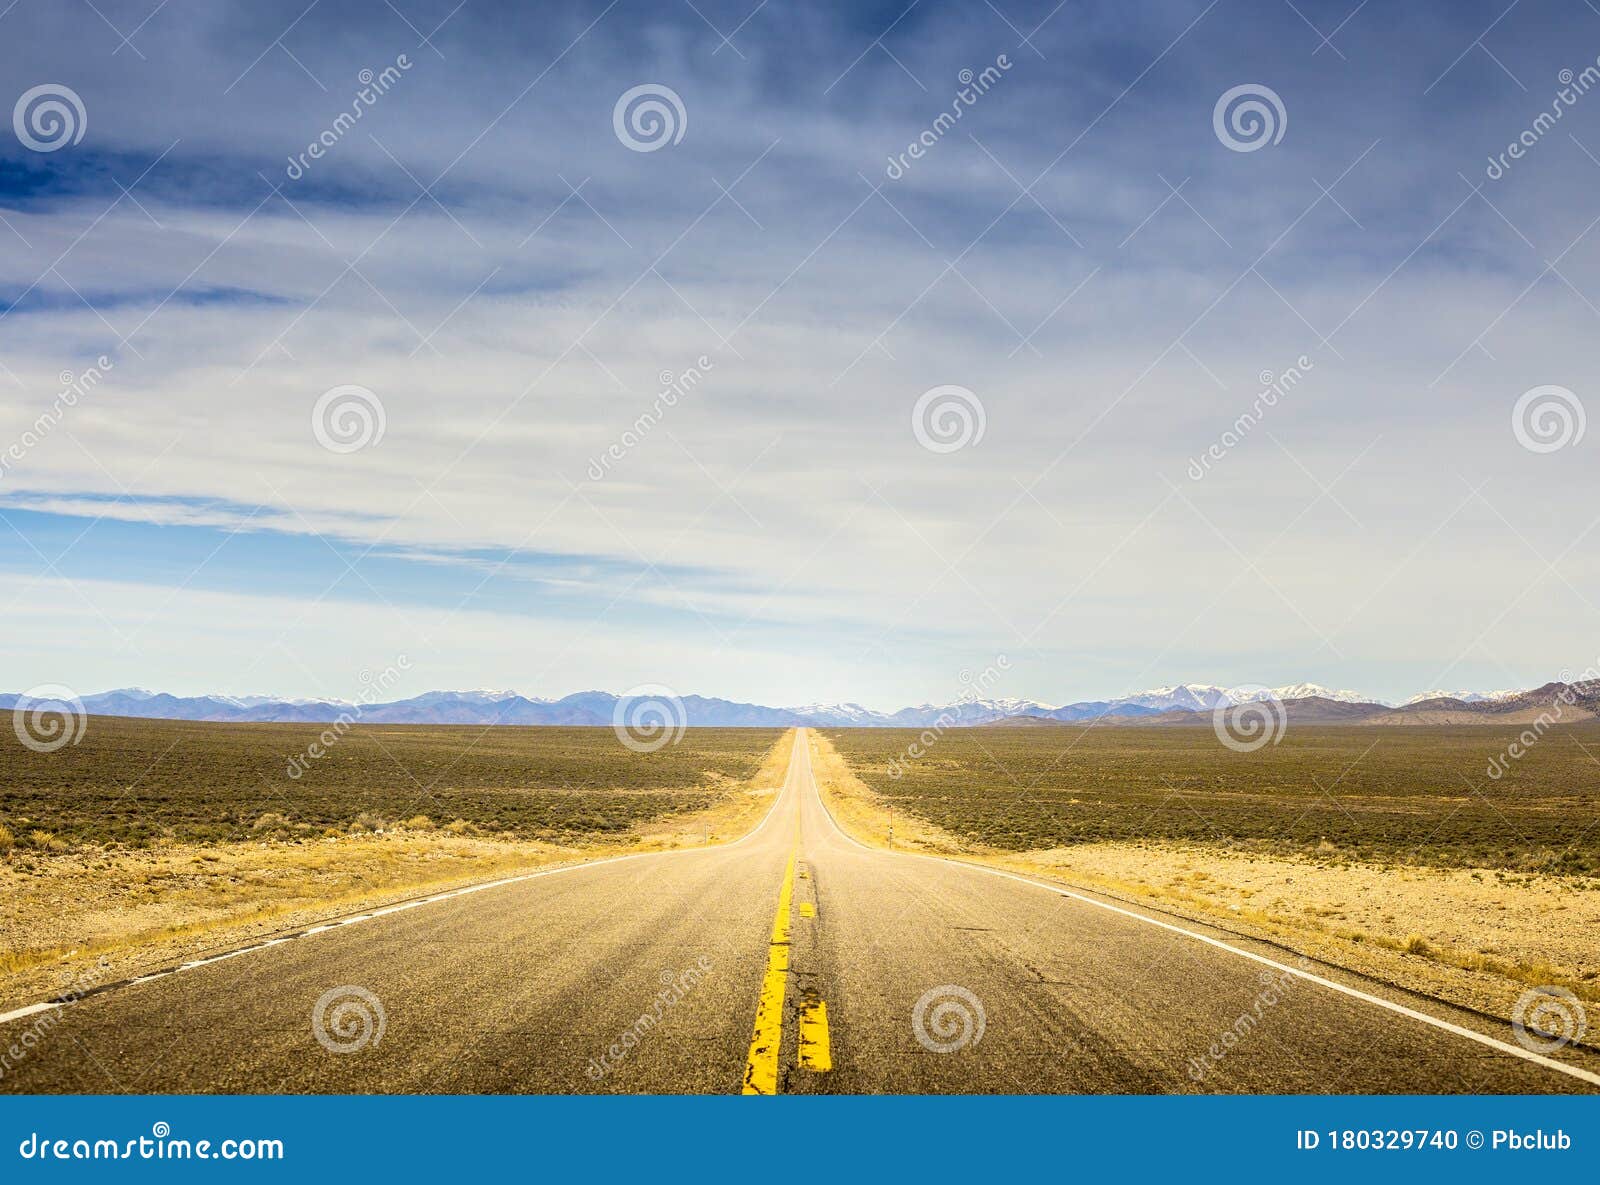 receding road through desert